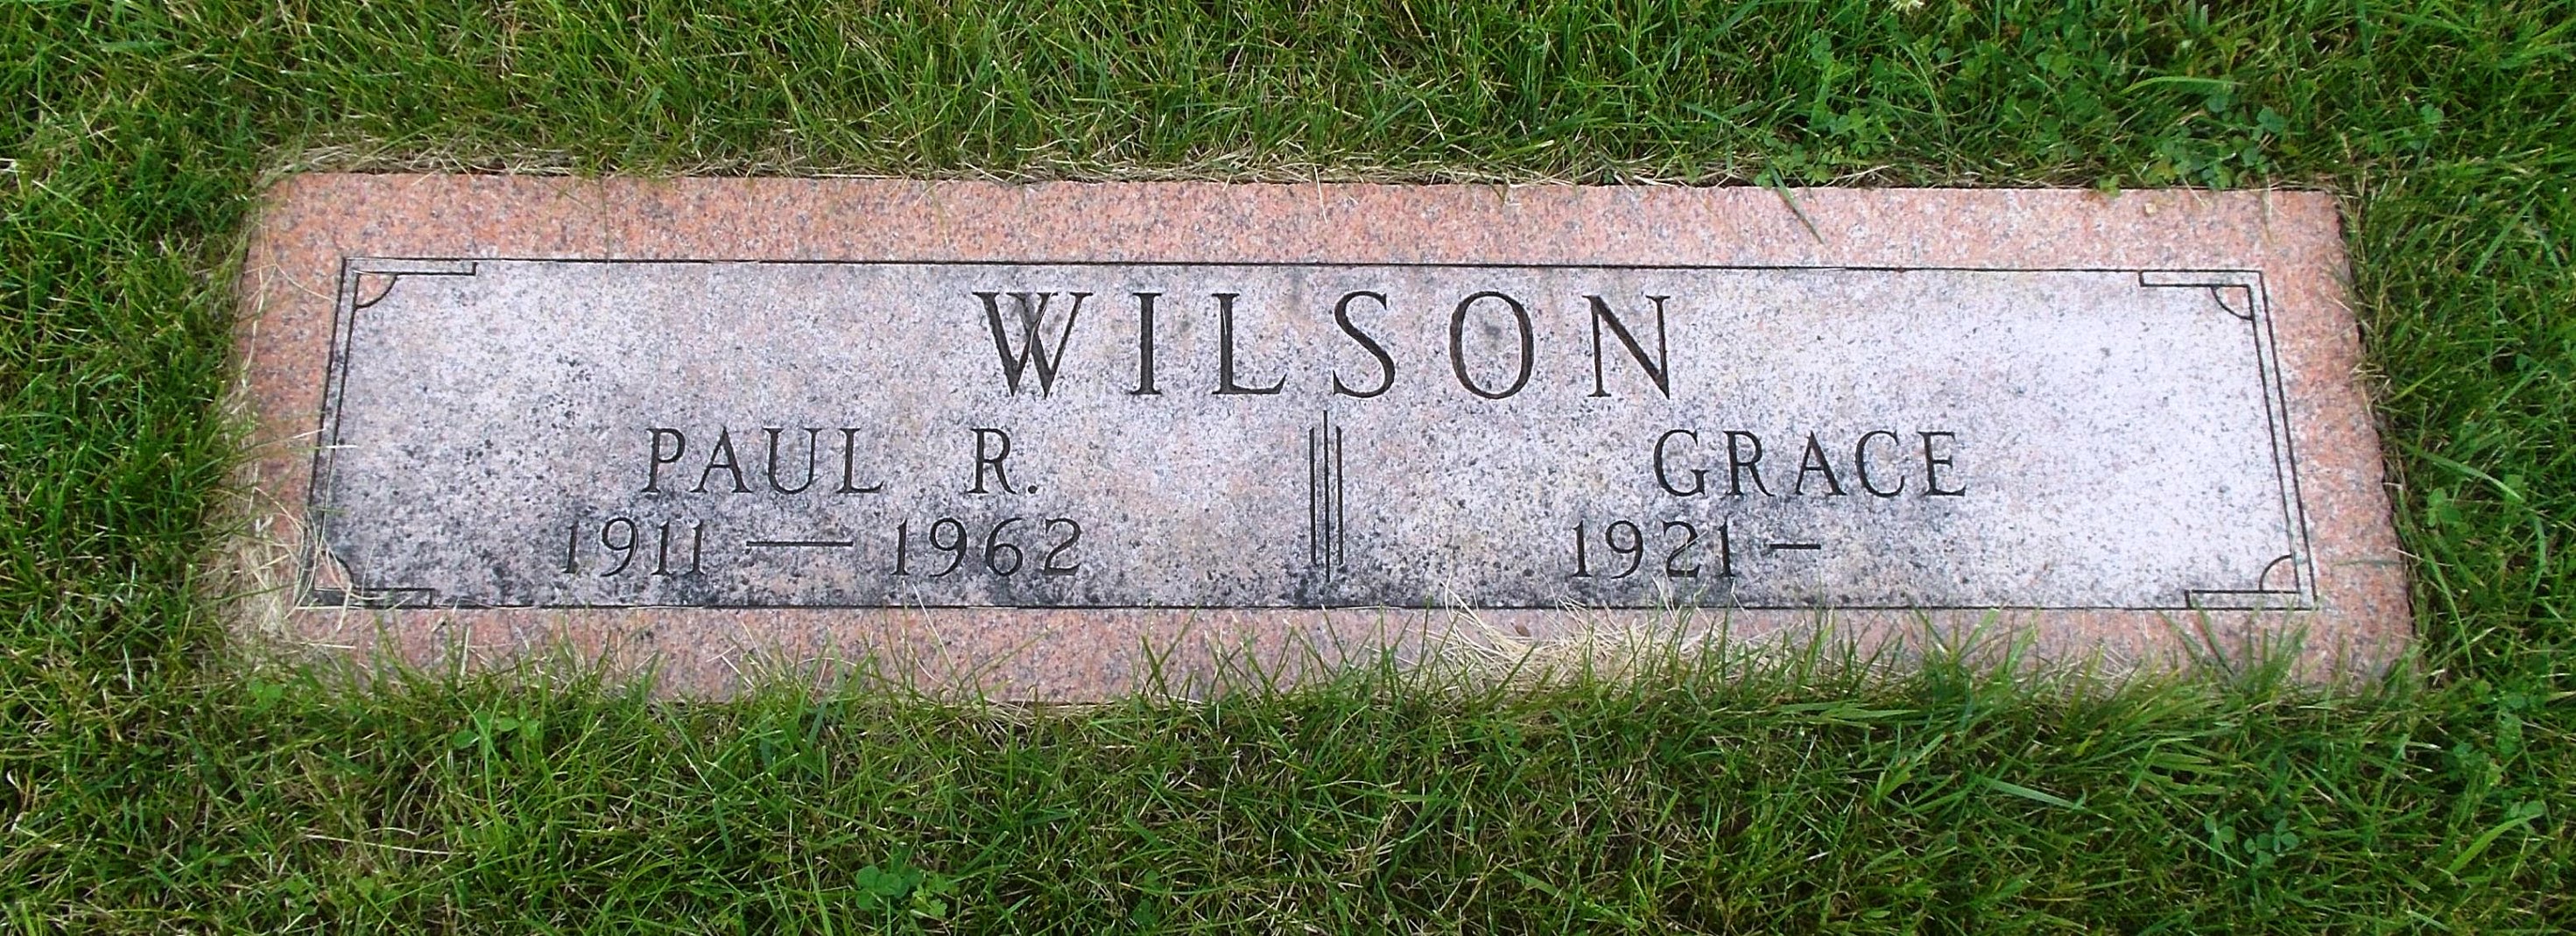 Paul R Wilson